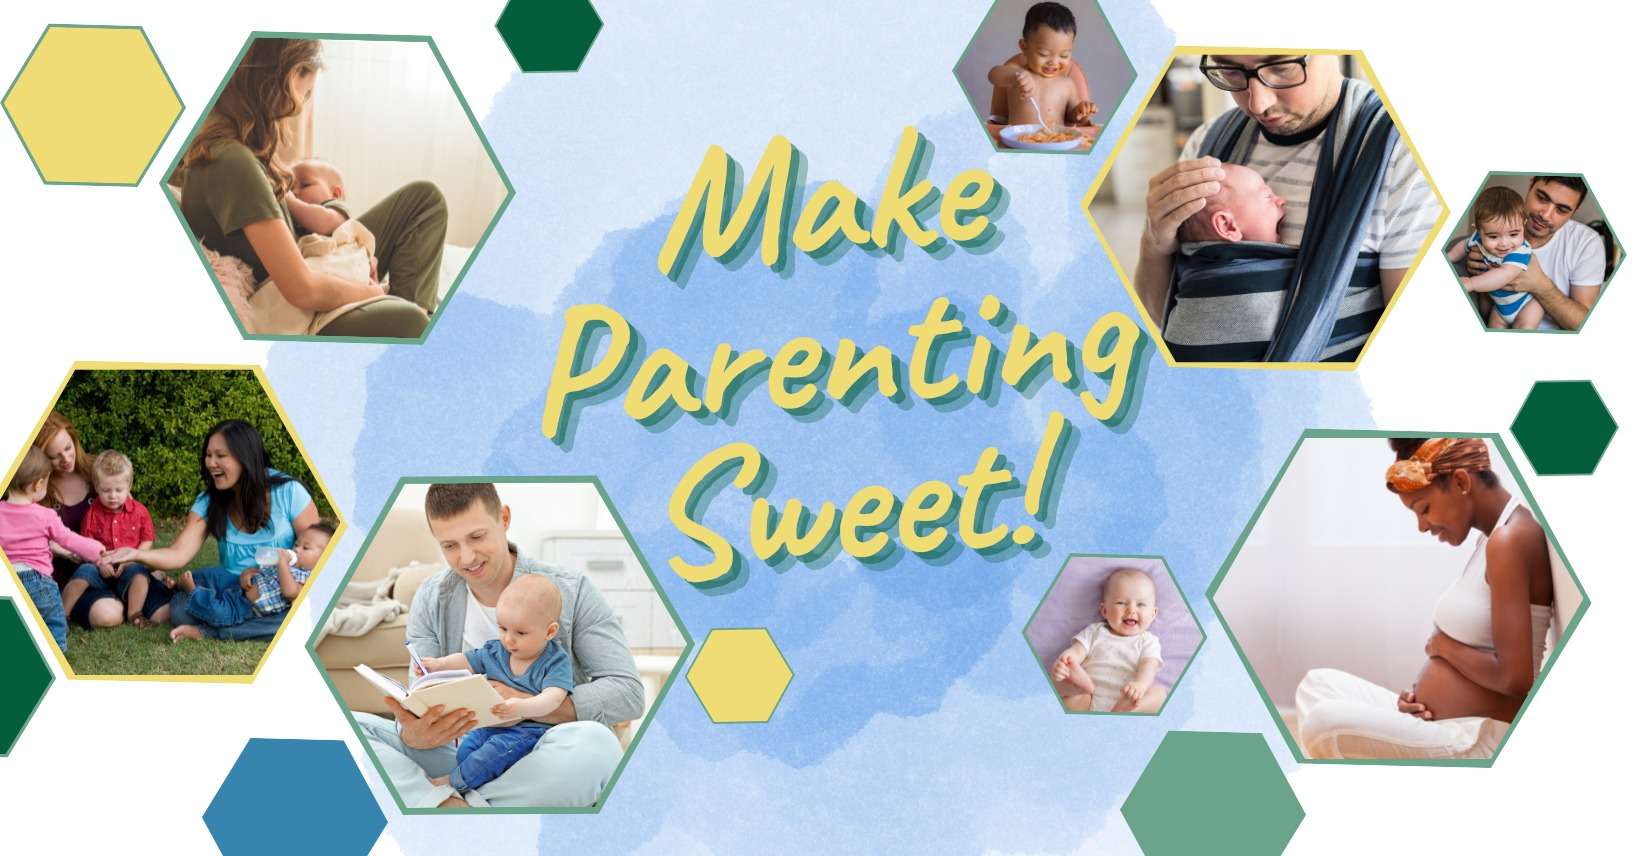 Make Parenting Sweet!